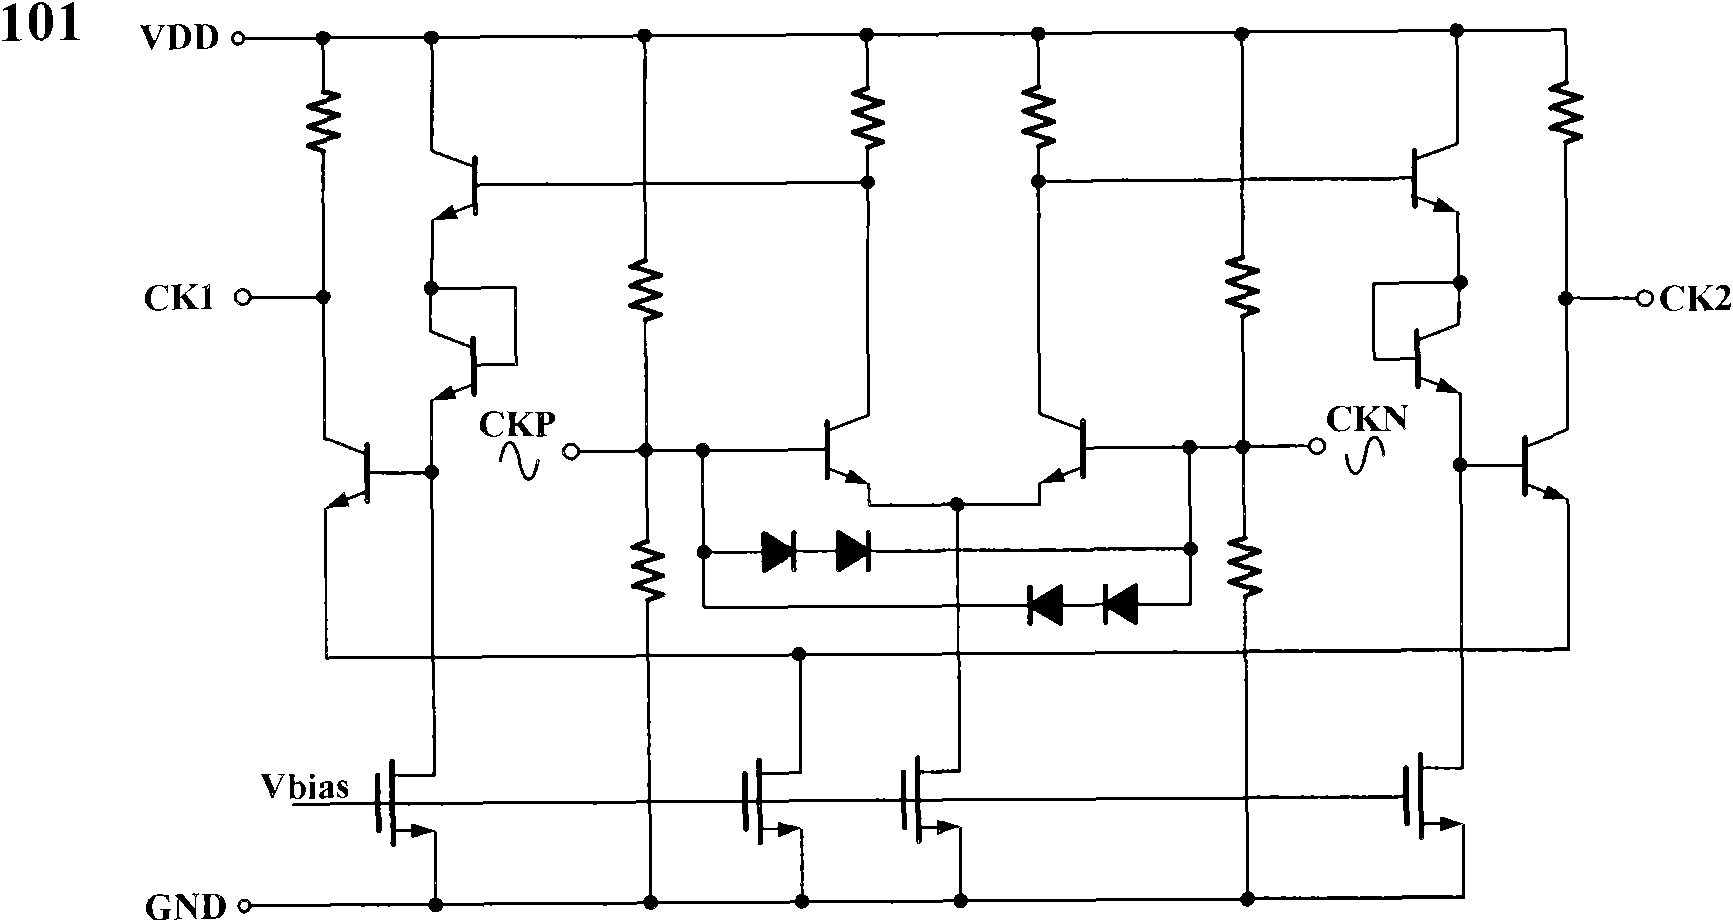 Clock adjustment circuit and adjustment method for clock circuit